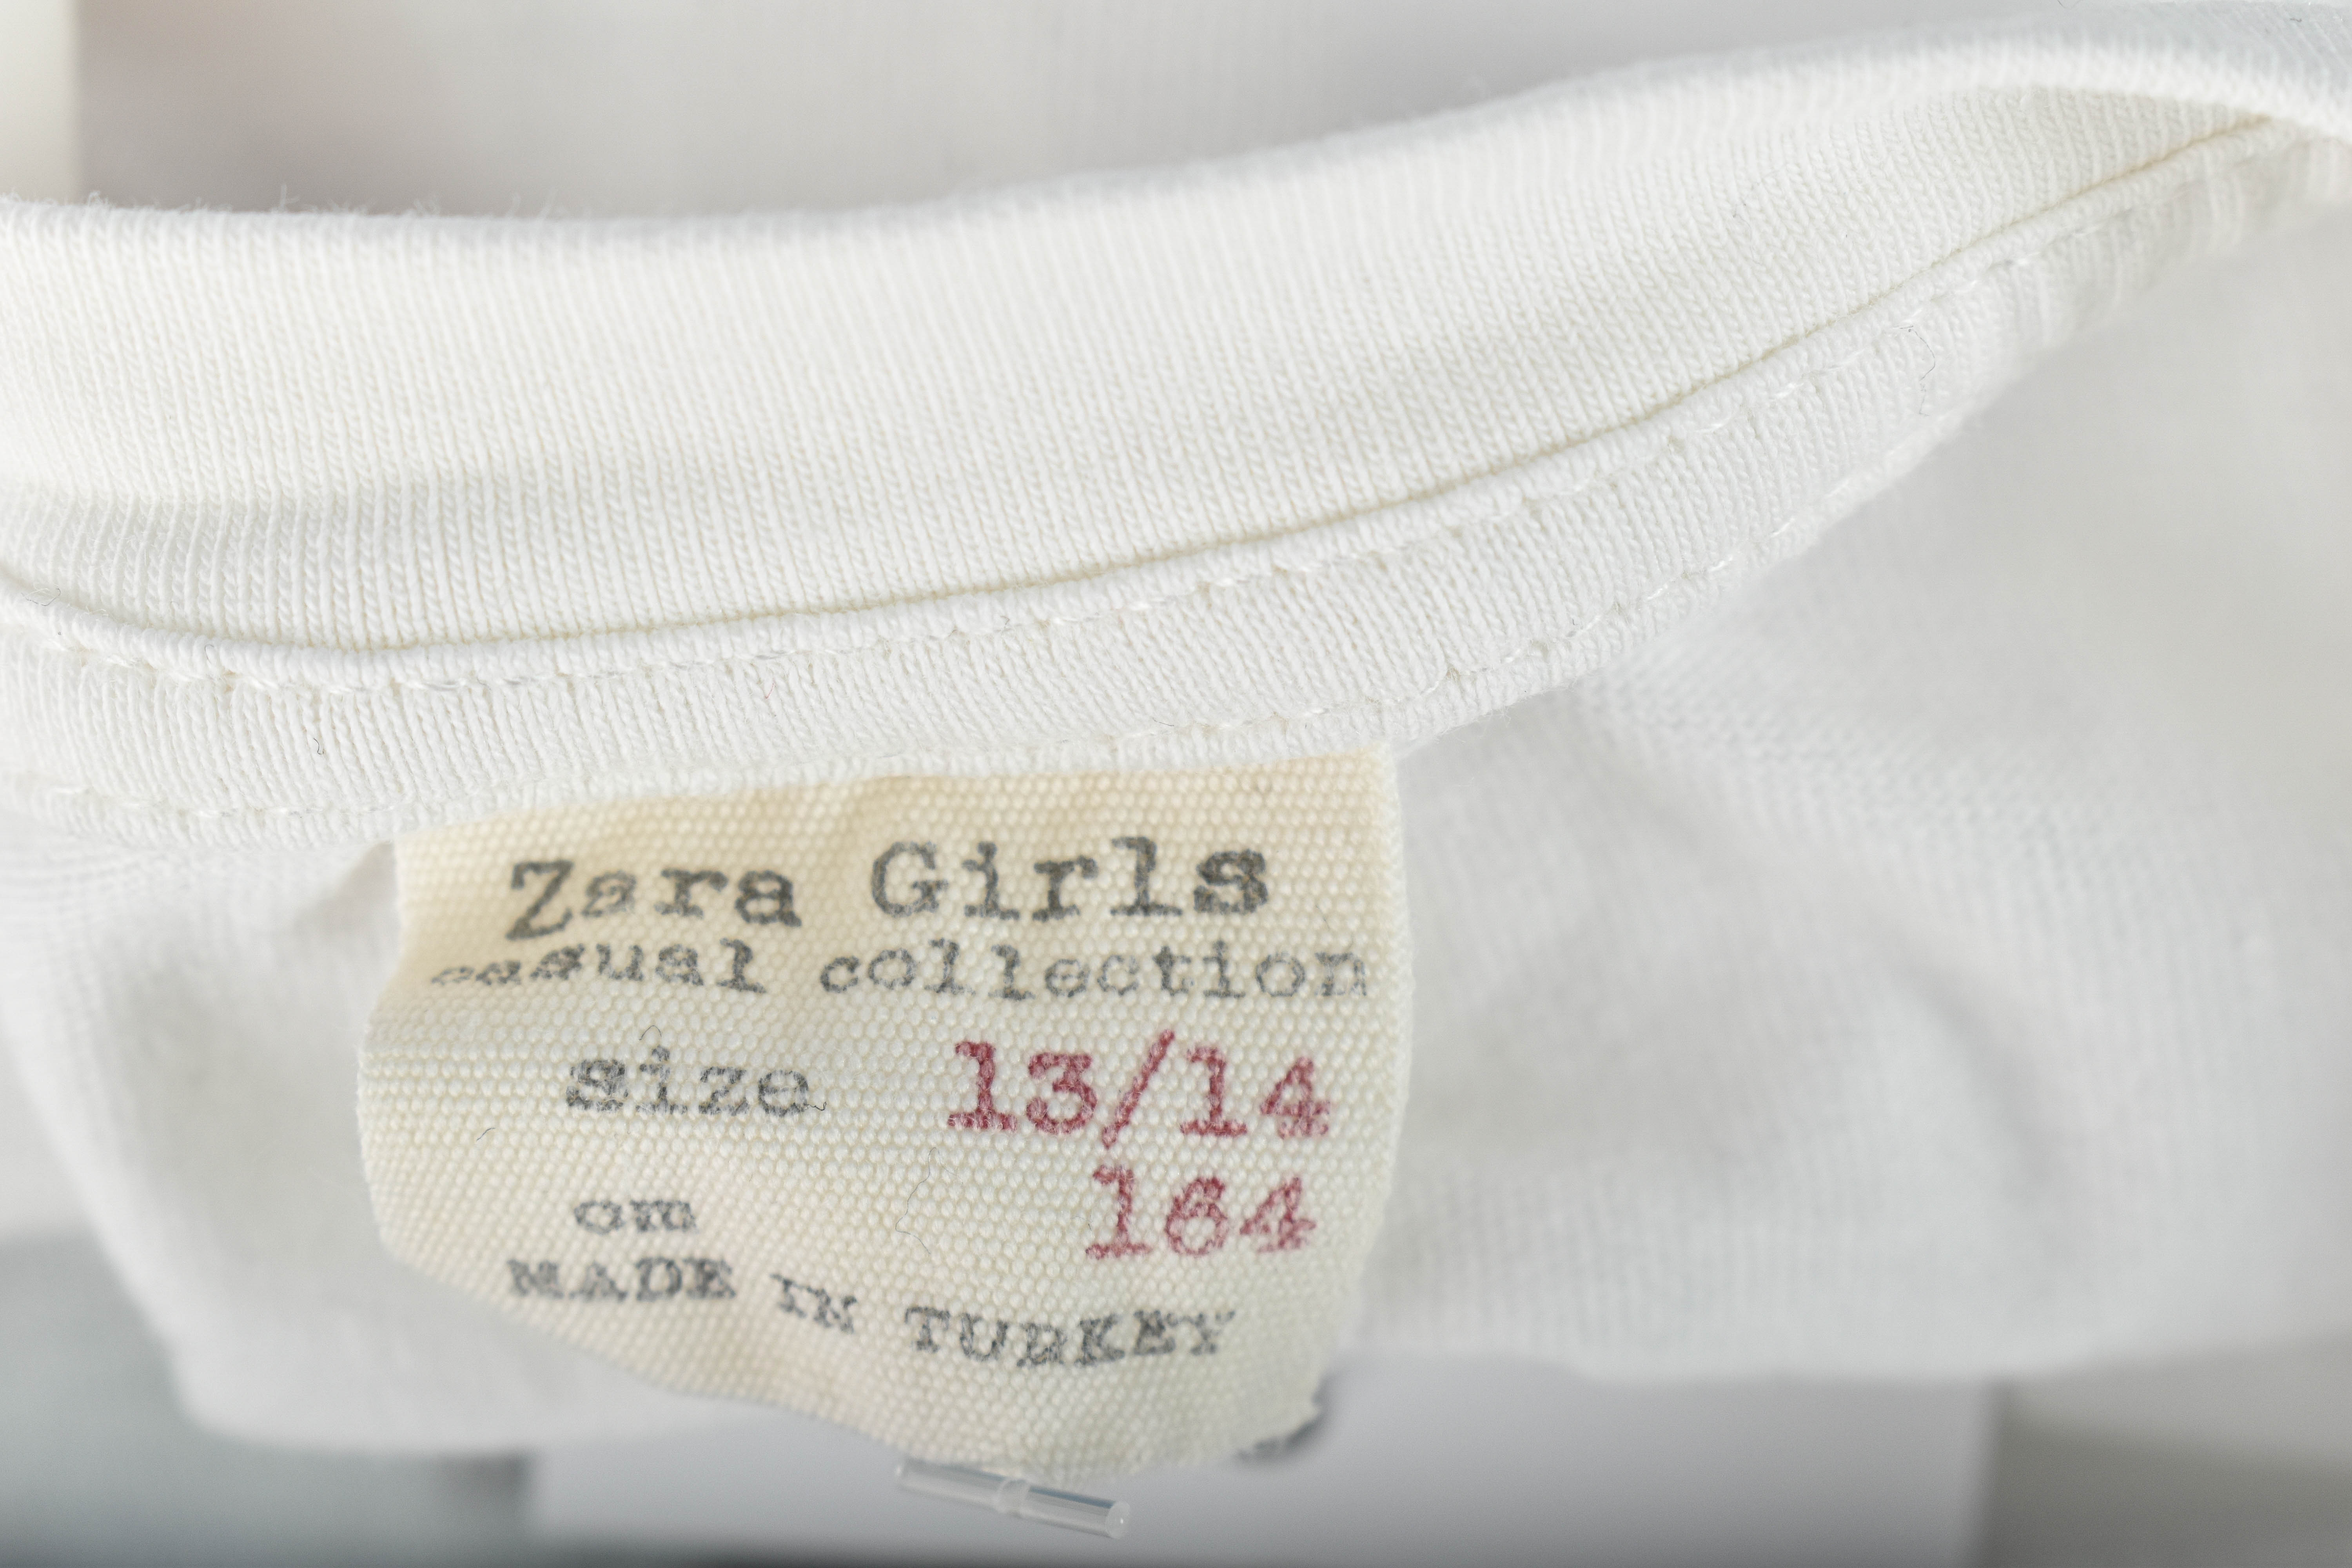 Girls' t-shirt - ZARA Girls - 2